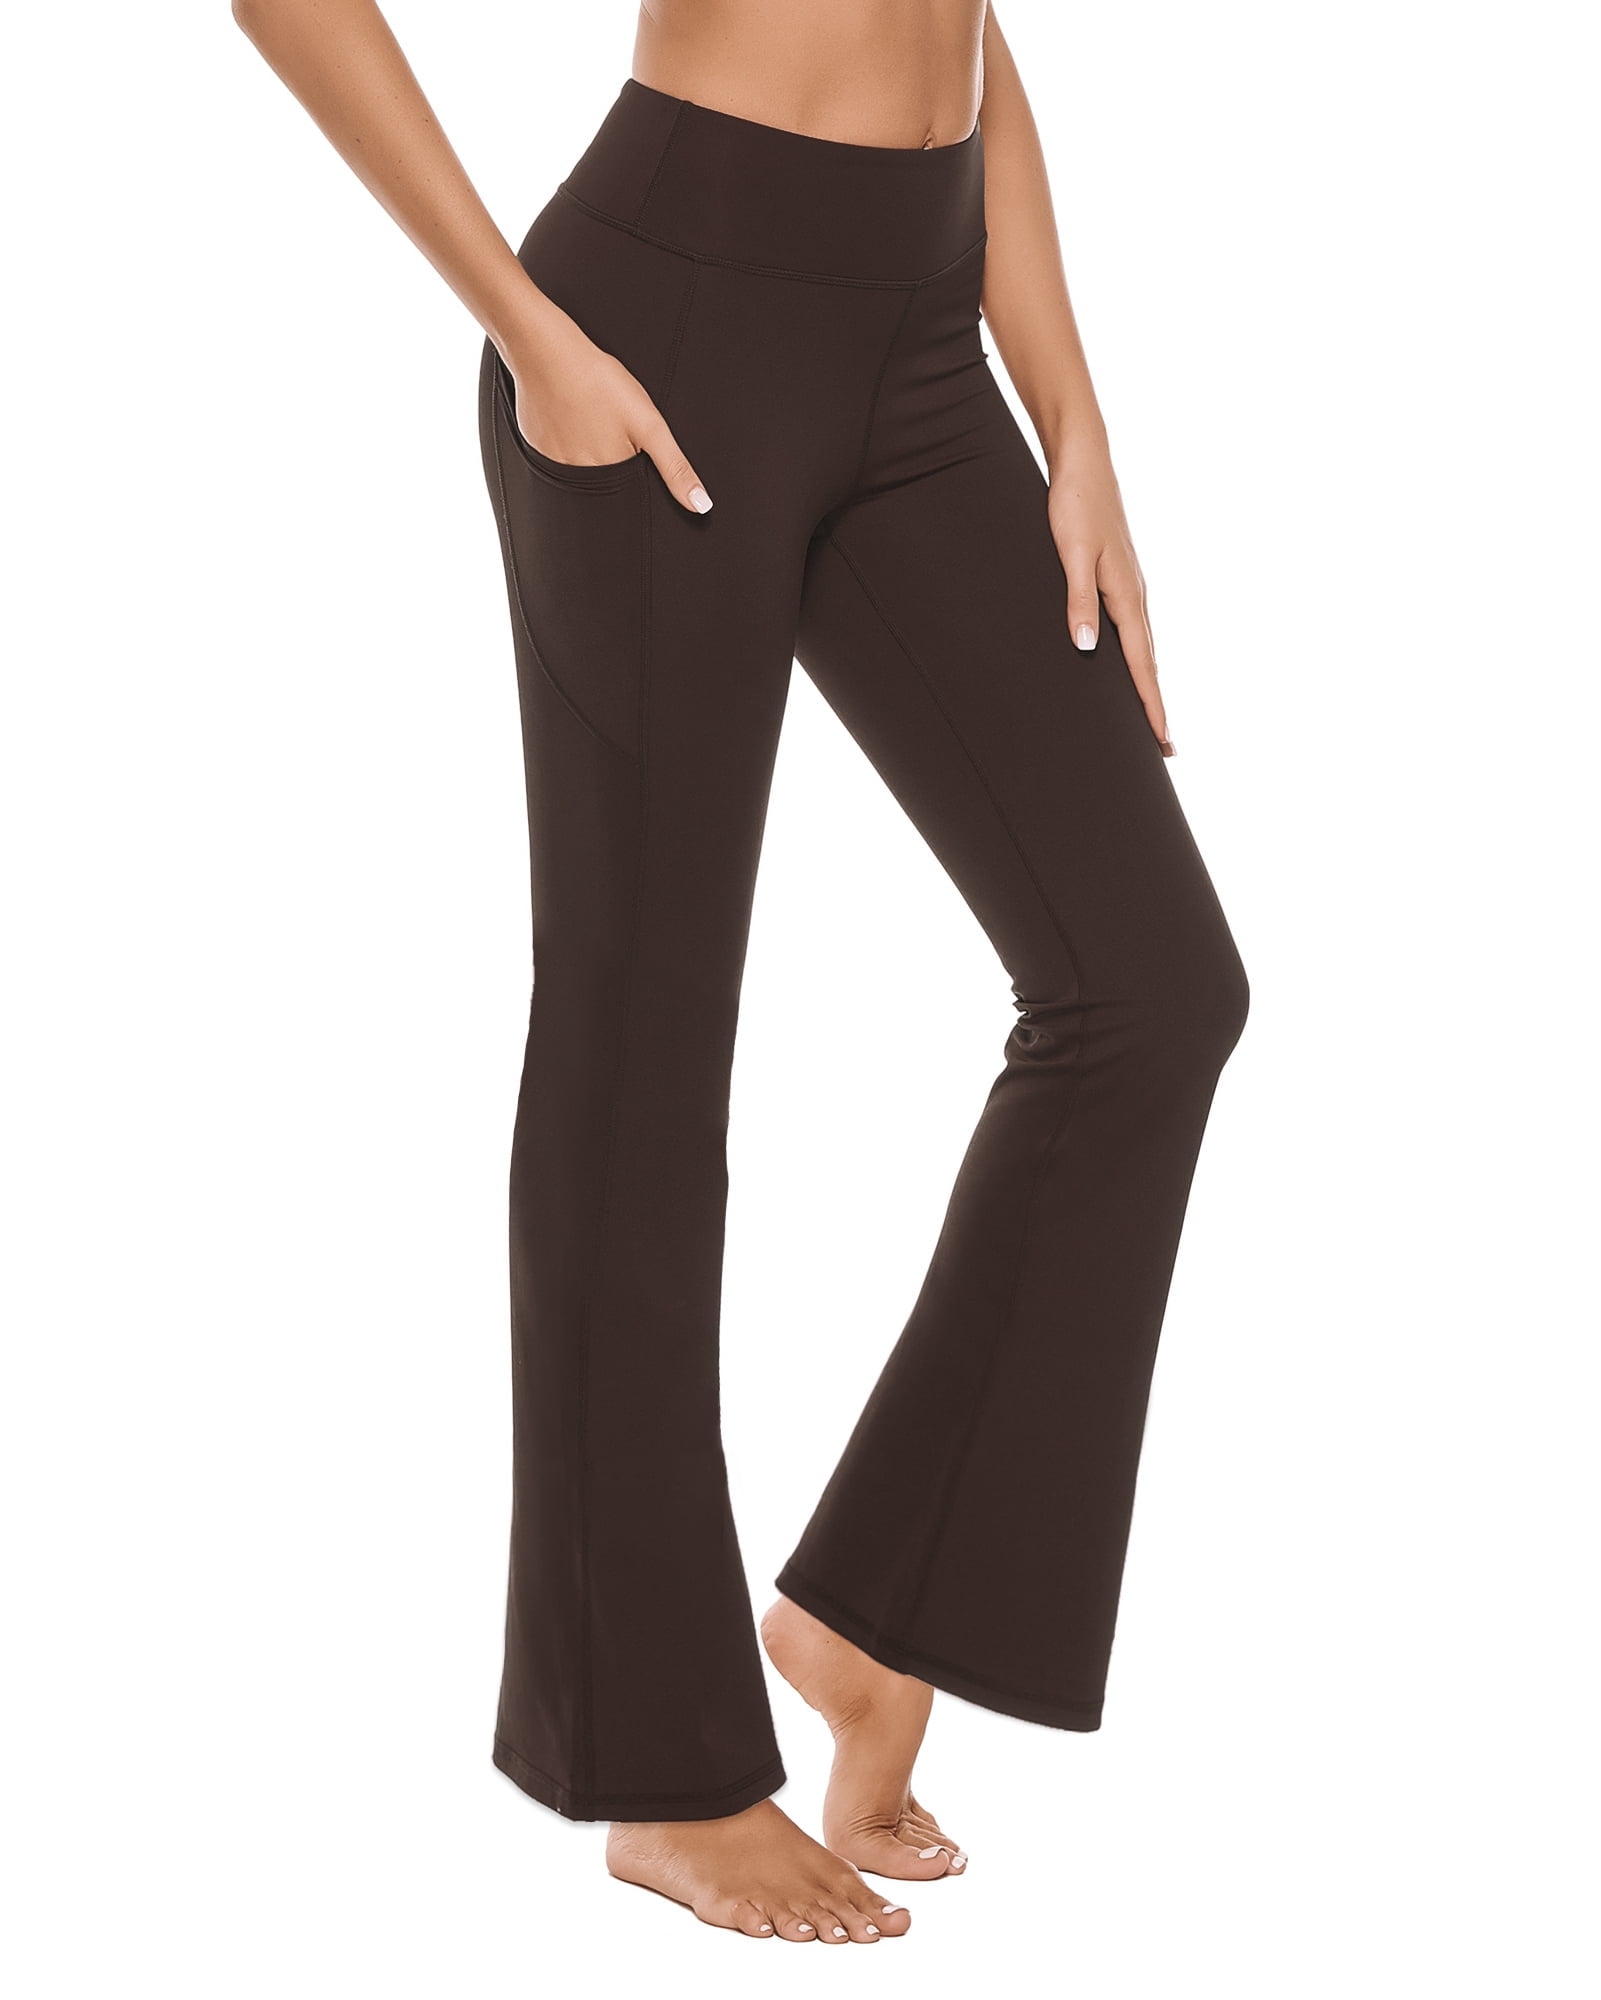 Stelle Women's Bootcut Yoga Pants with Pockets,High Waisted Tummy Control Workout  Yoga Lounge Pants,Full Length Flare Leggings Bootleg Work Dress Pants  30,XS-XXL Black 